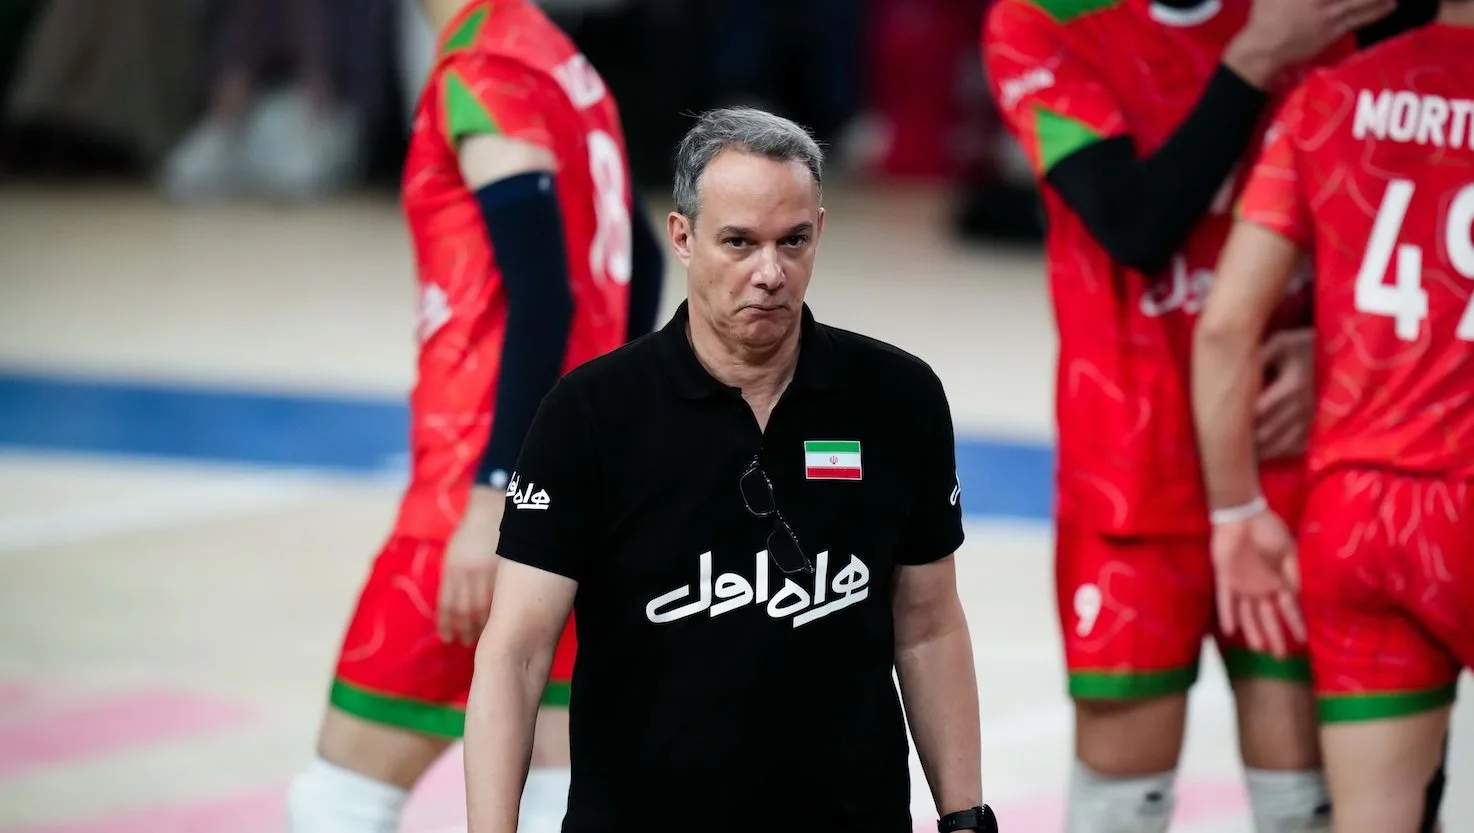 WorldofVolley :: IRI M: Iran Volleyball Federation Sacks Coach Mauricio Motta Paes After Poor Performance